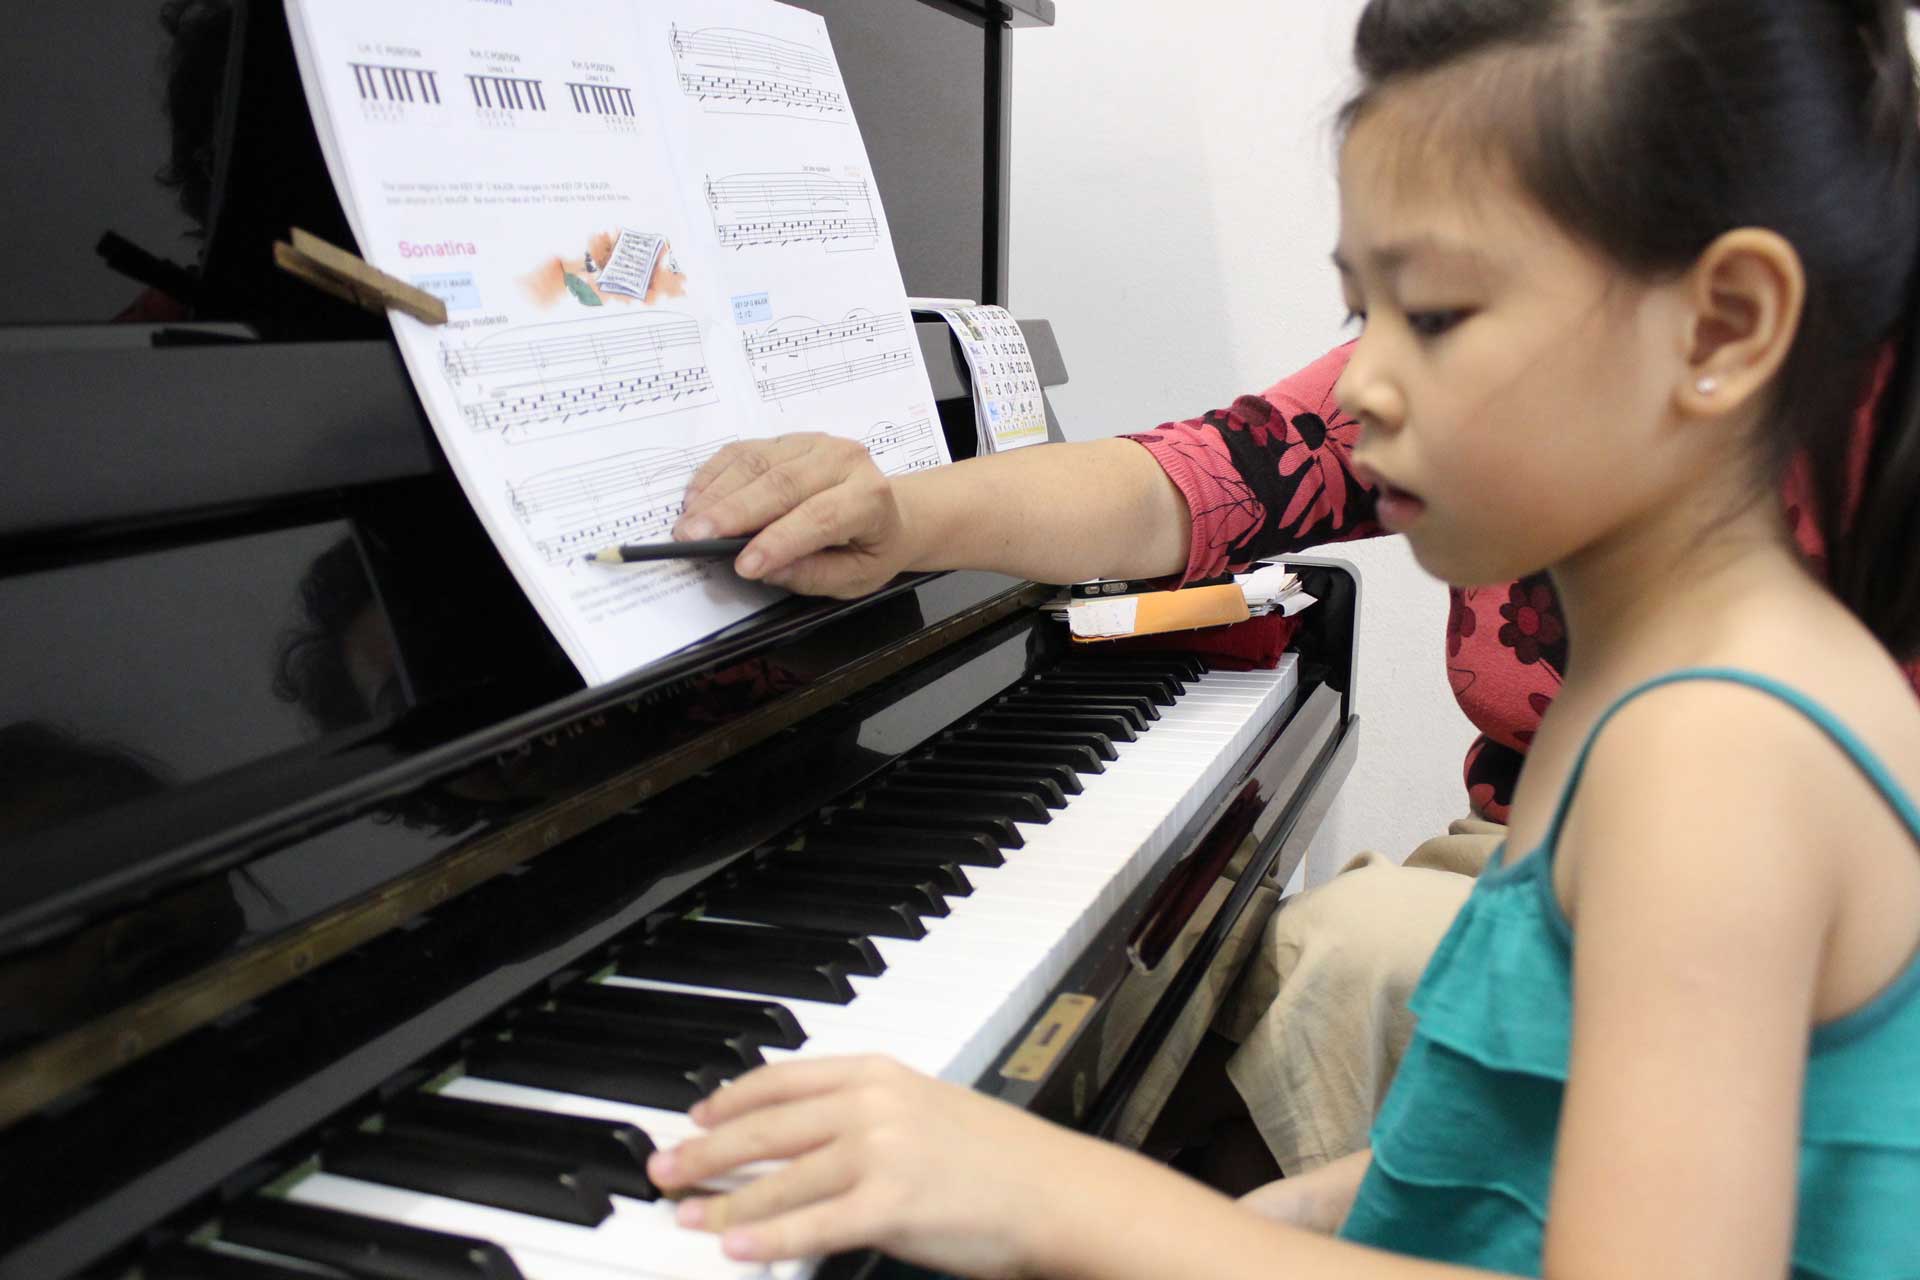 Уроки фортепиано в музыкальной школе. Уроки фортепиано. Занятие в музыкальной школе. Уроки фортепиано для детей. Уроки пианино.